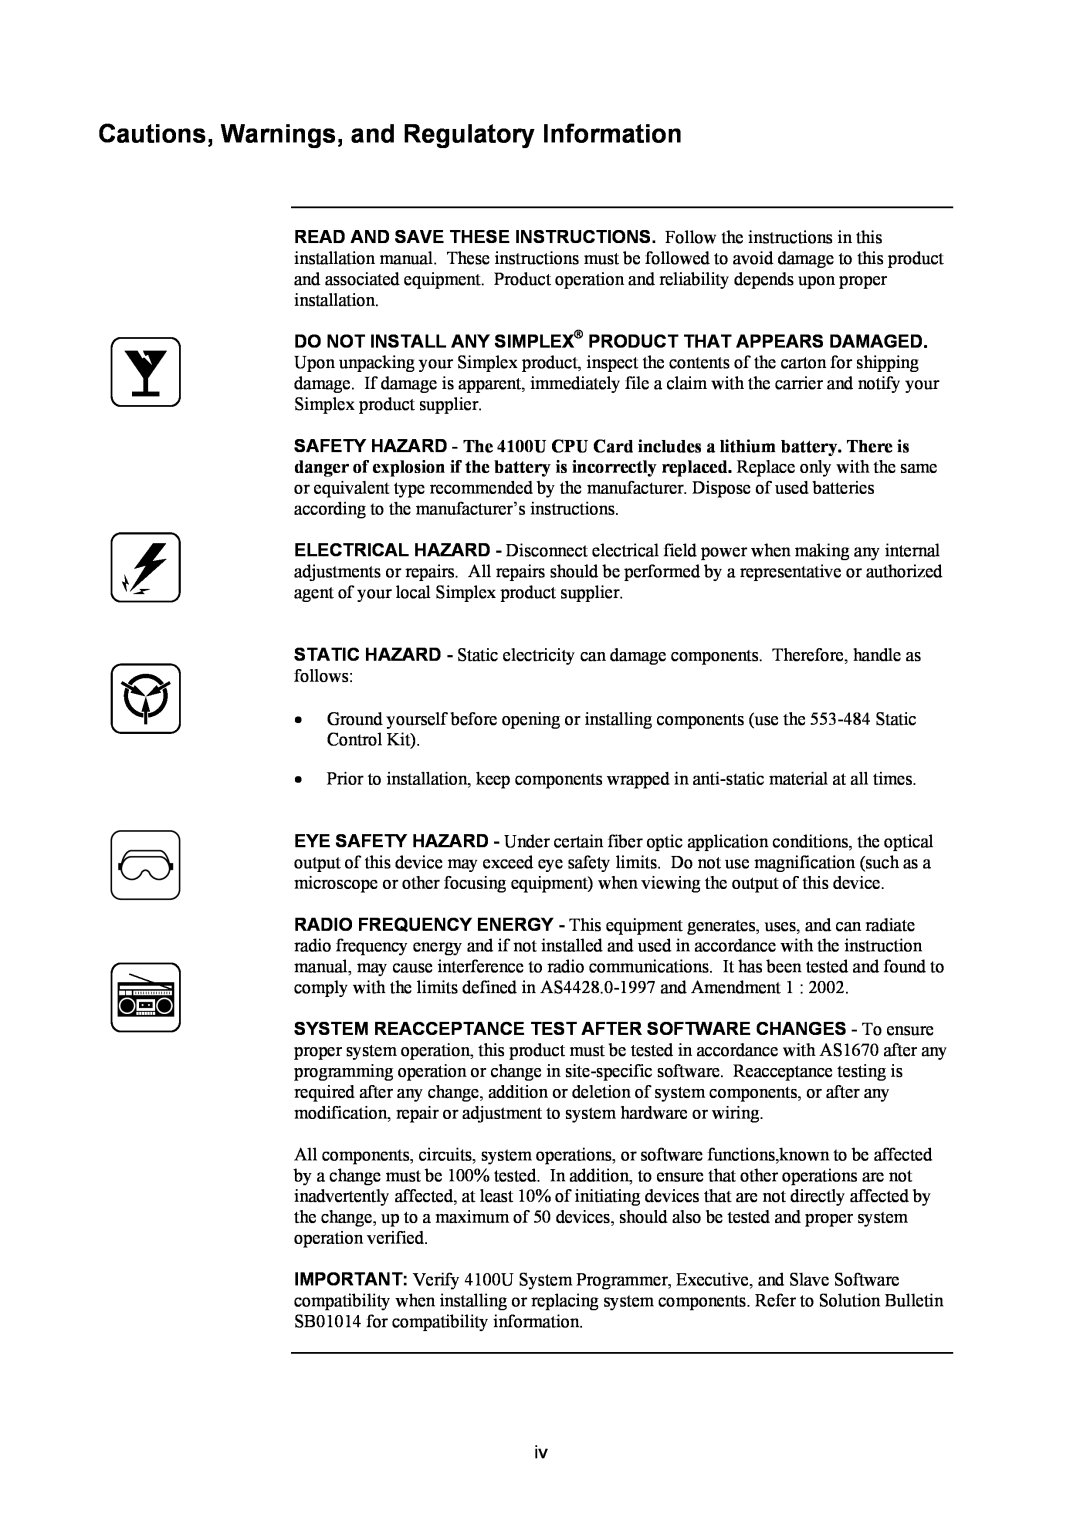 Tyco 4100U installation manual Cautions, Warnings, and Regulatory Information 